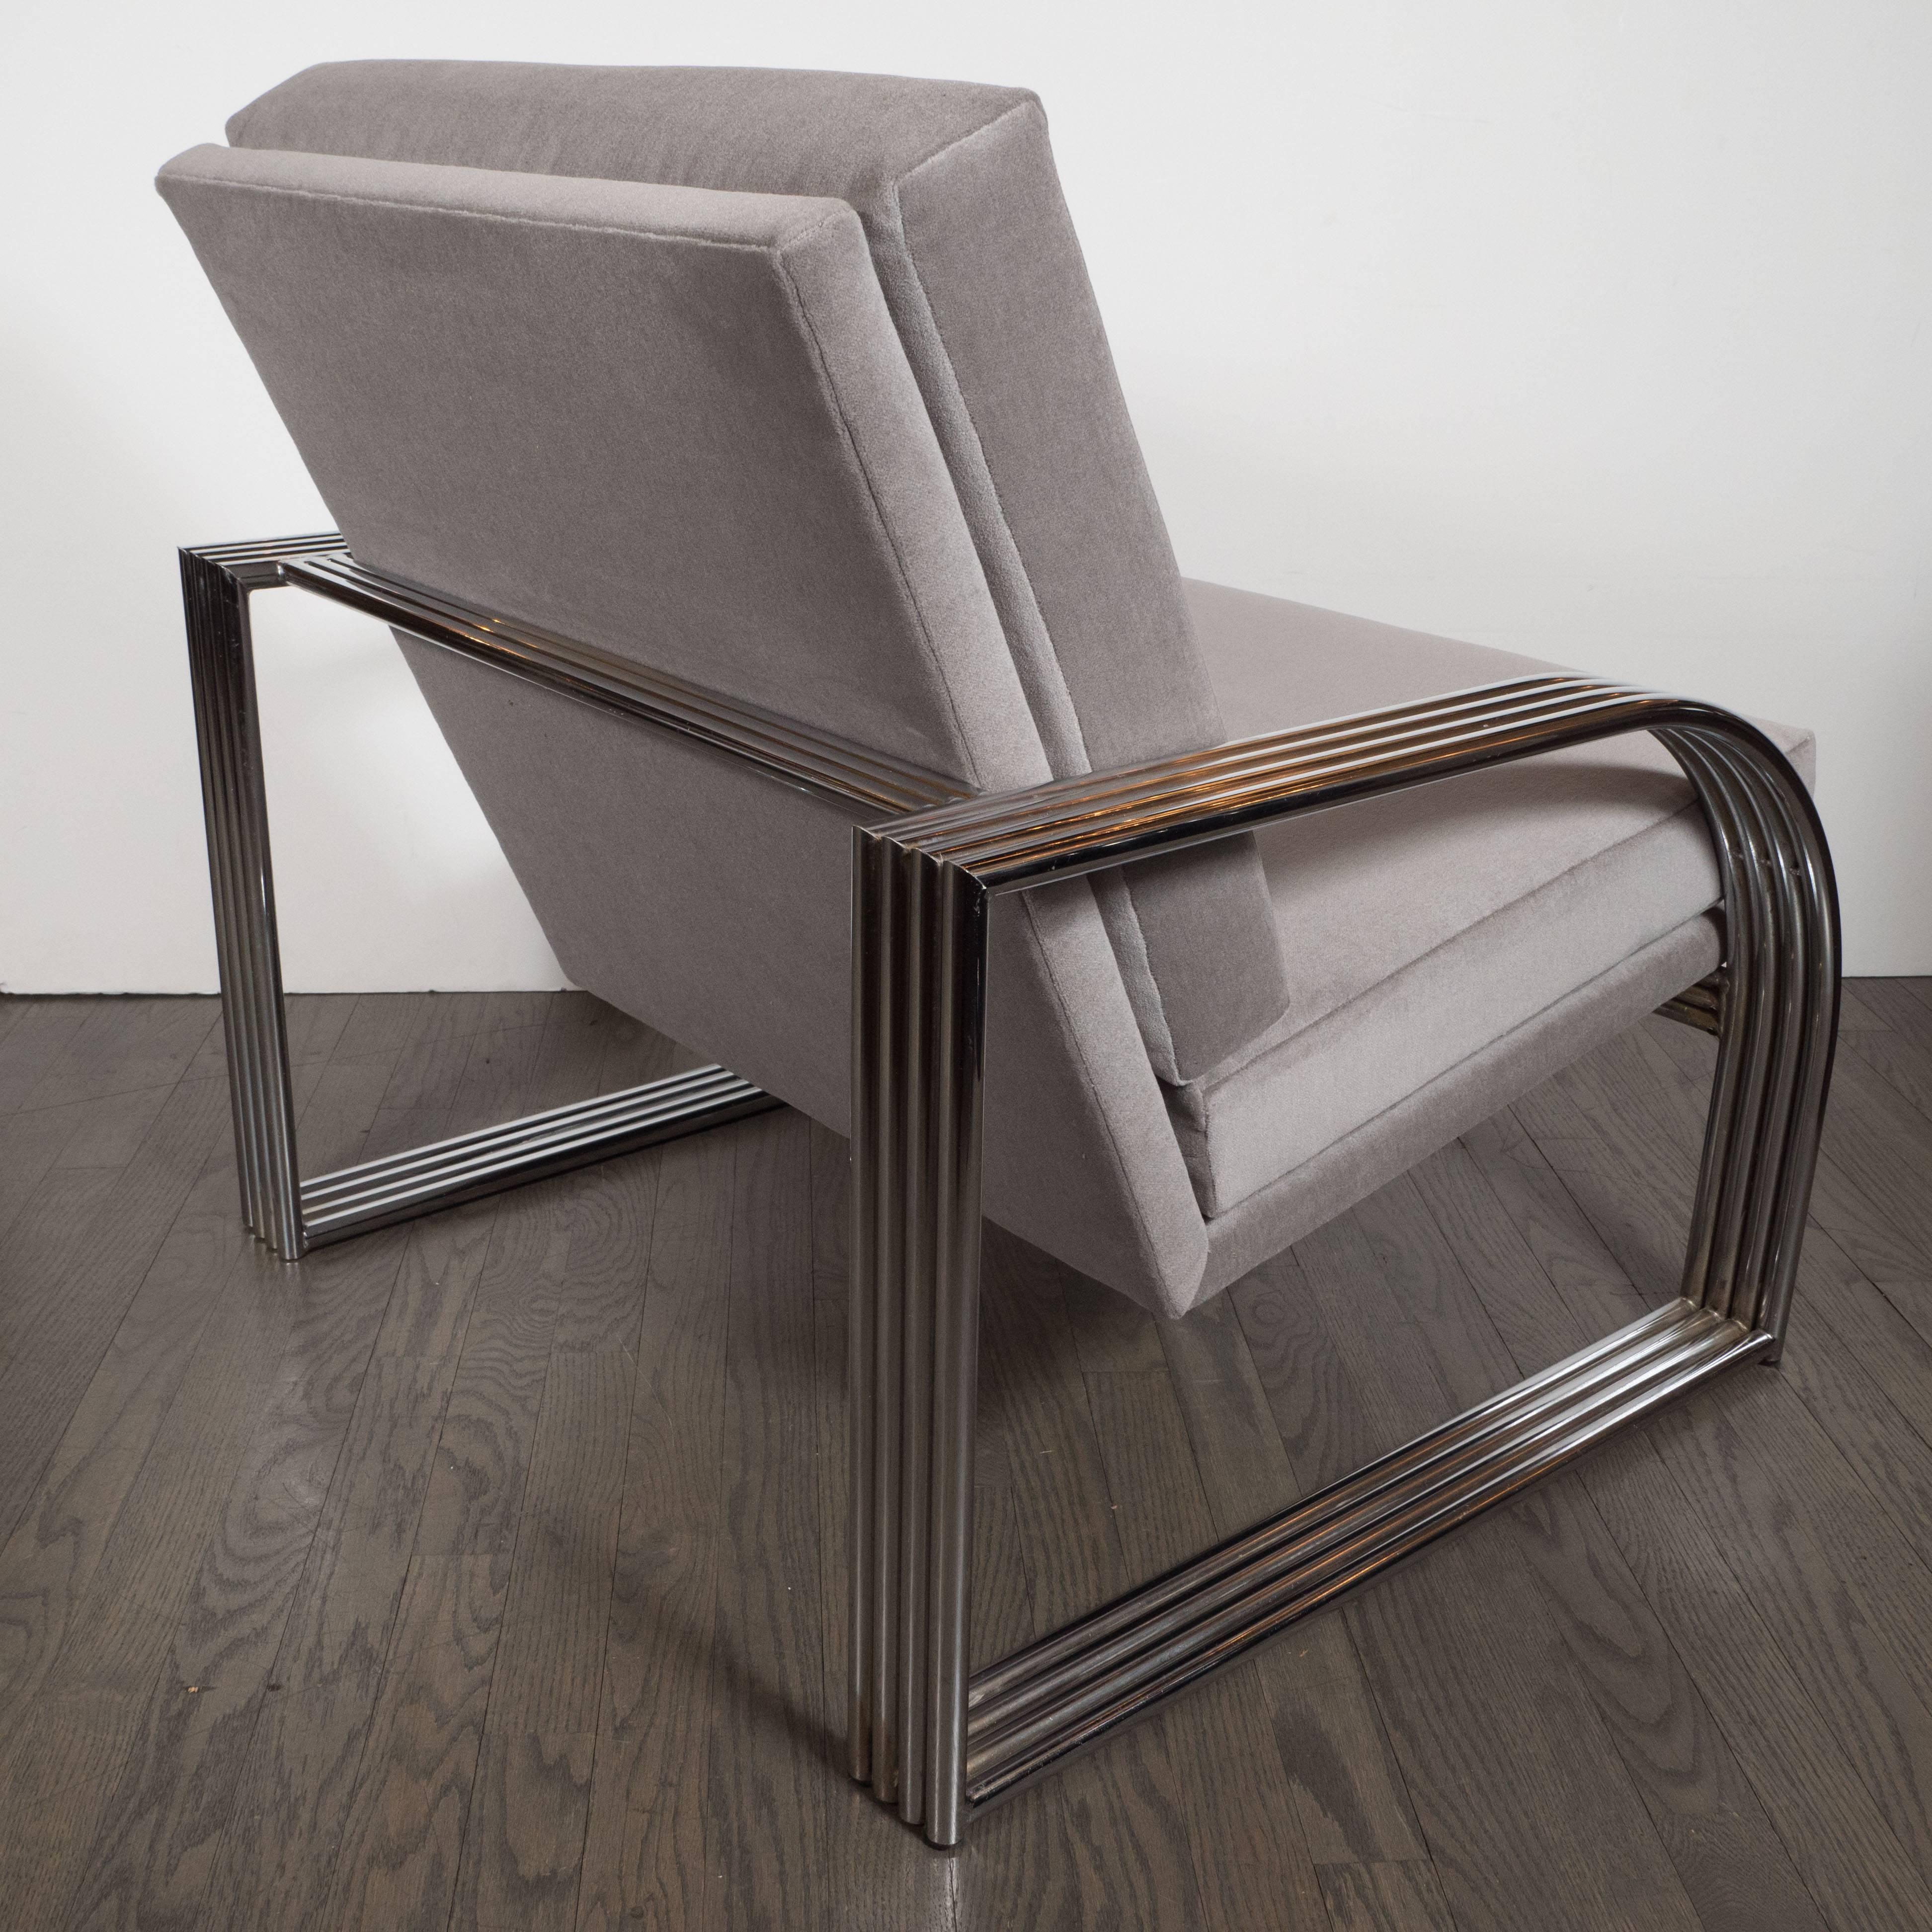 American Art Deco Revival Chrome and Platinum Velvet Club Chair in Jay Spectre Manner